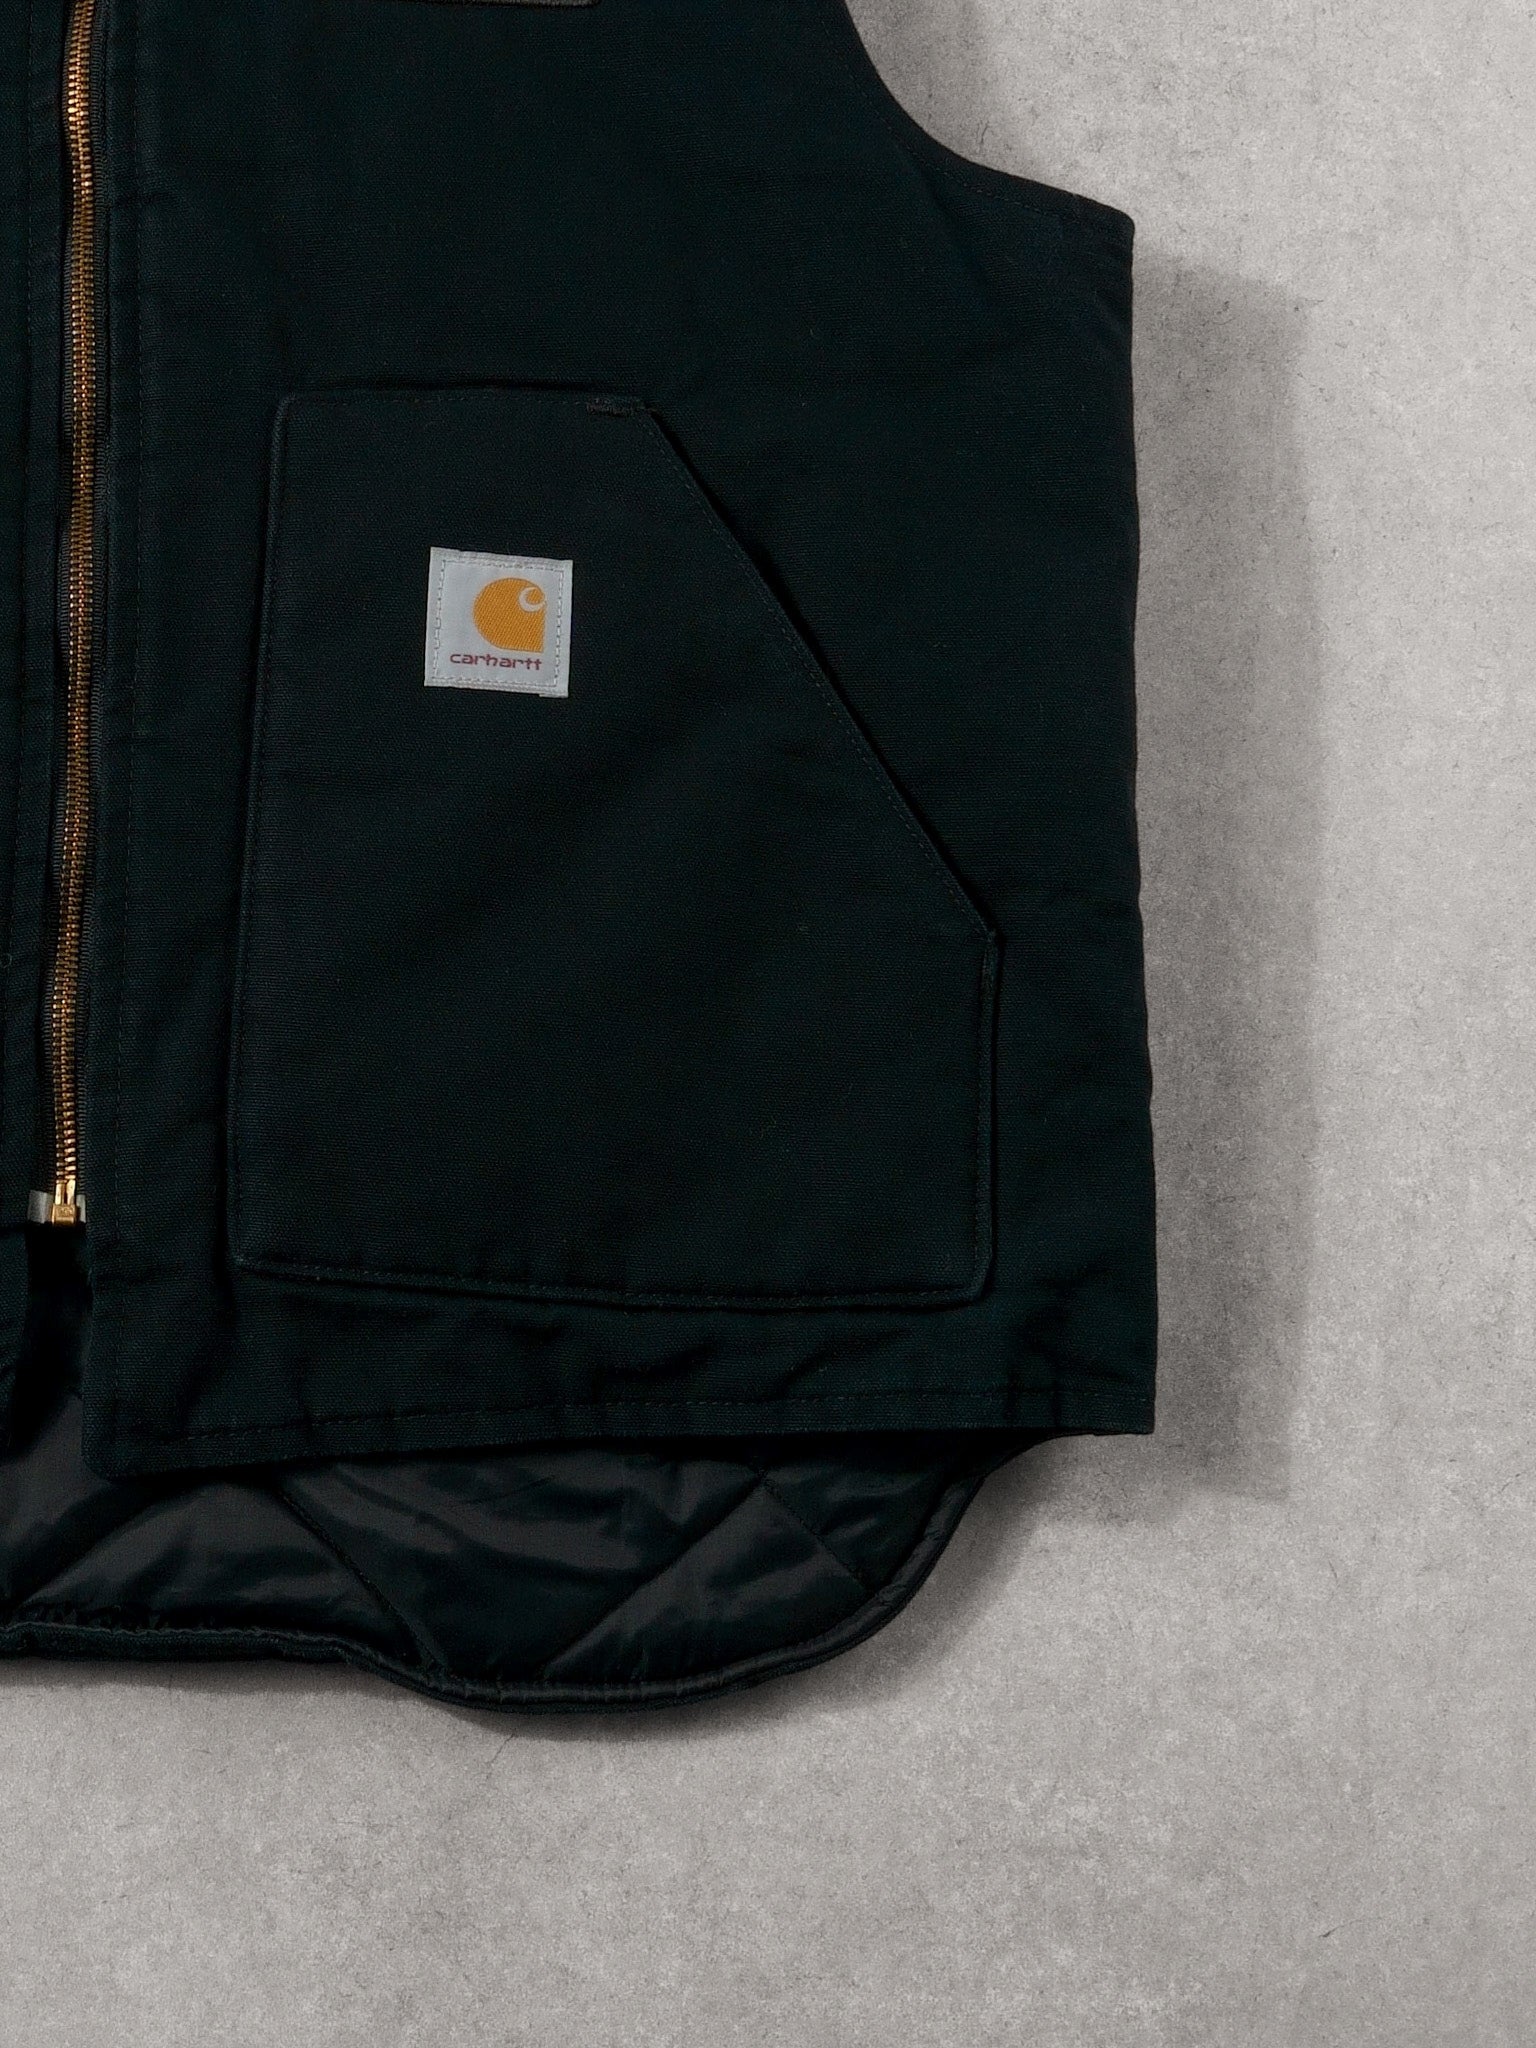 Vintage 90s Black Carhartt Dewalt x Concord Hardware Workwear Vest (L)